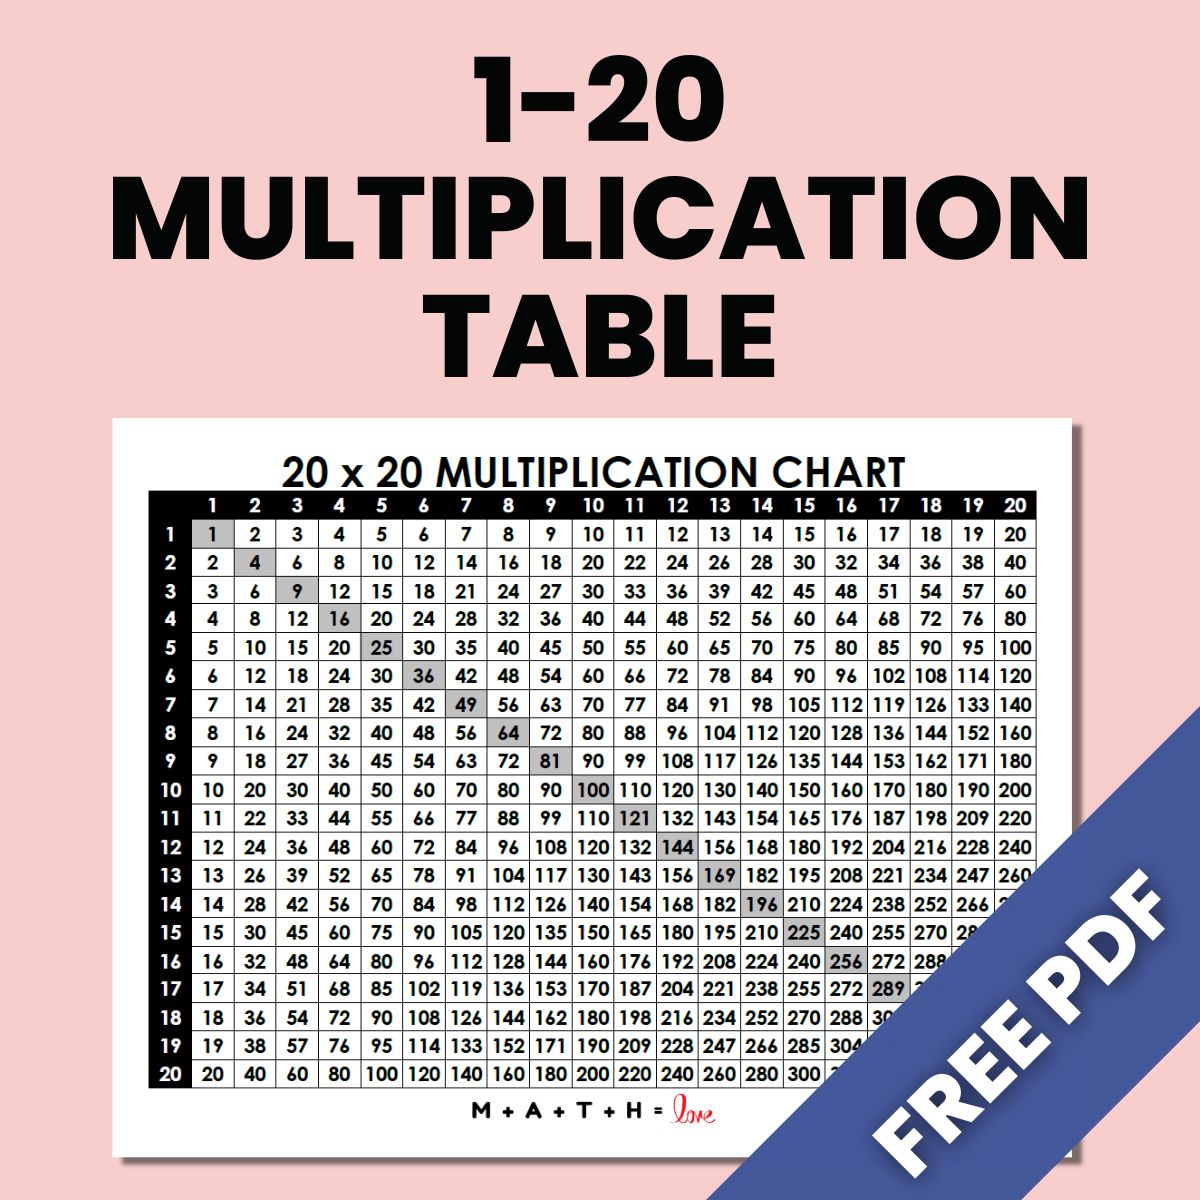 Multiplication Table 1-20 [Free Printable PDF]